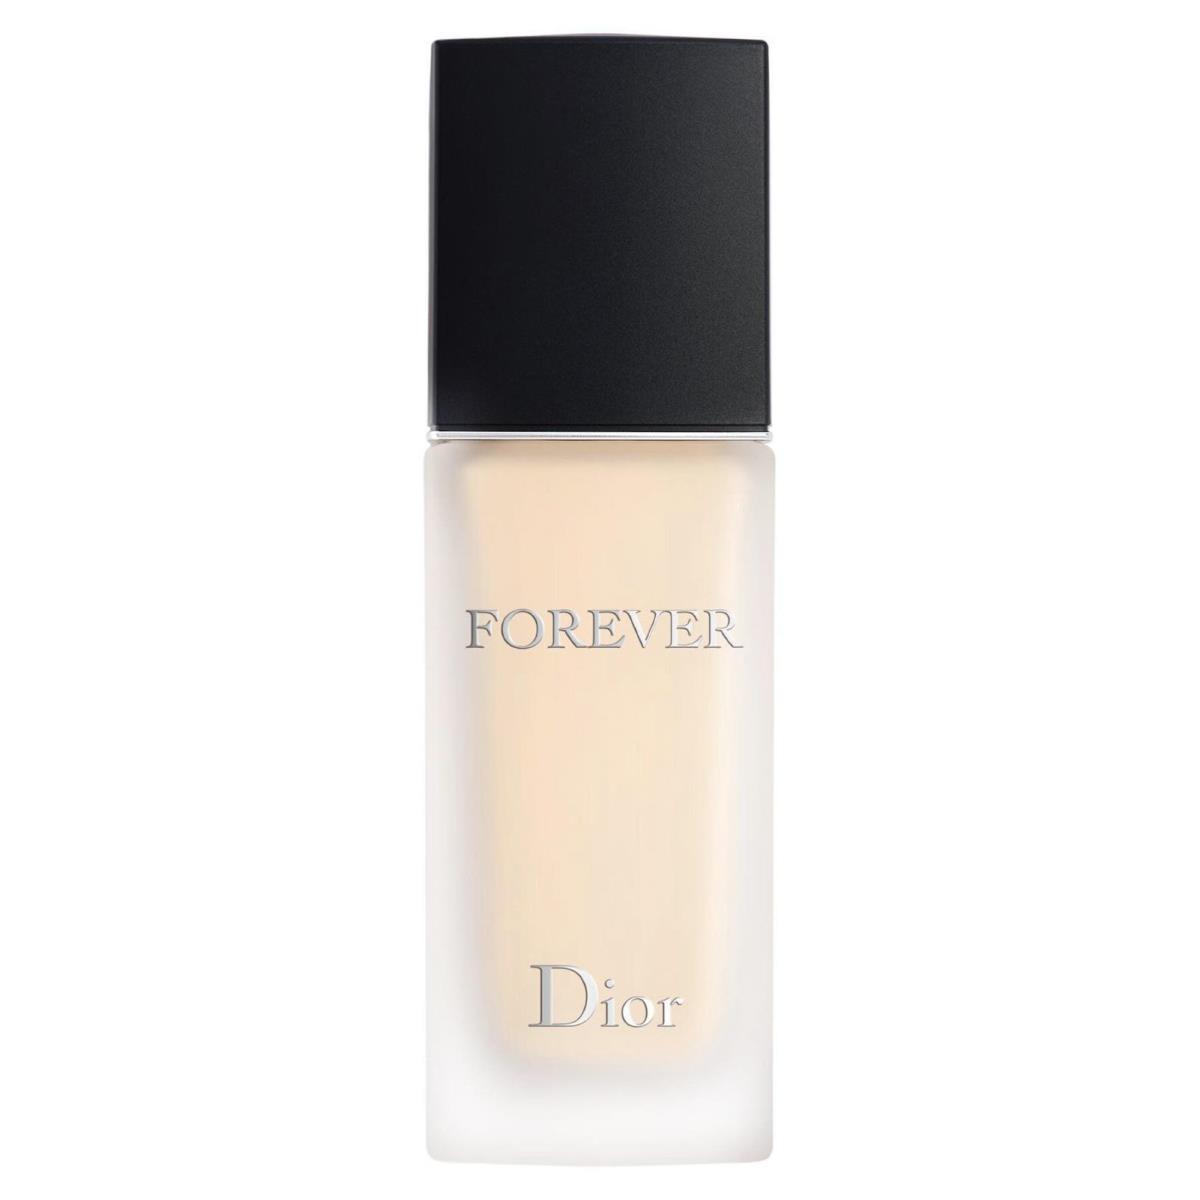 Dior Forever Matte Skincare Foundation Spf 15 0W Warm